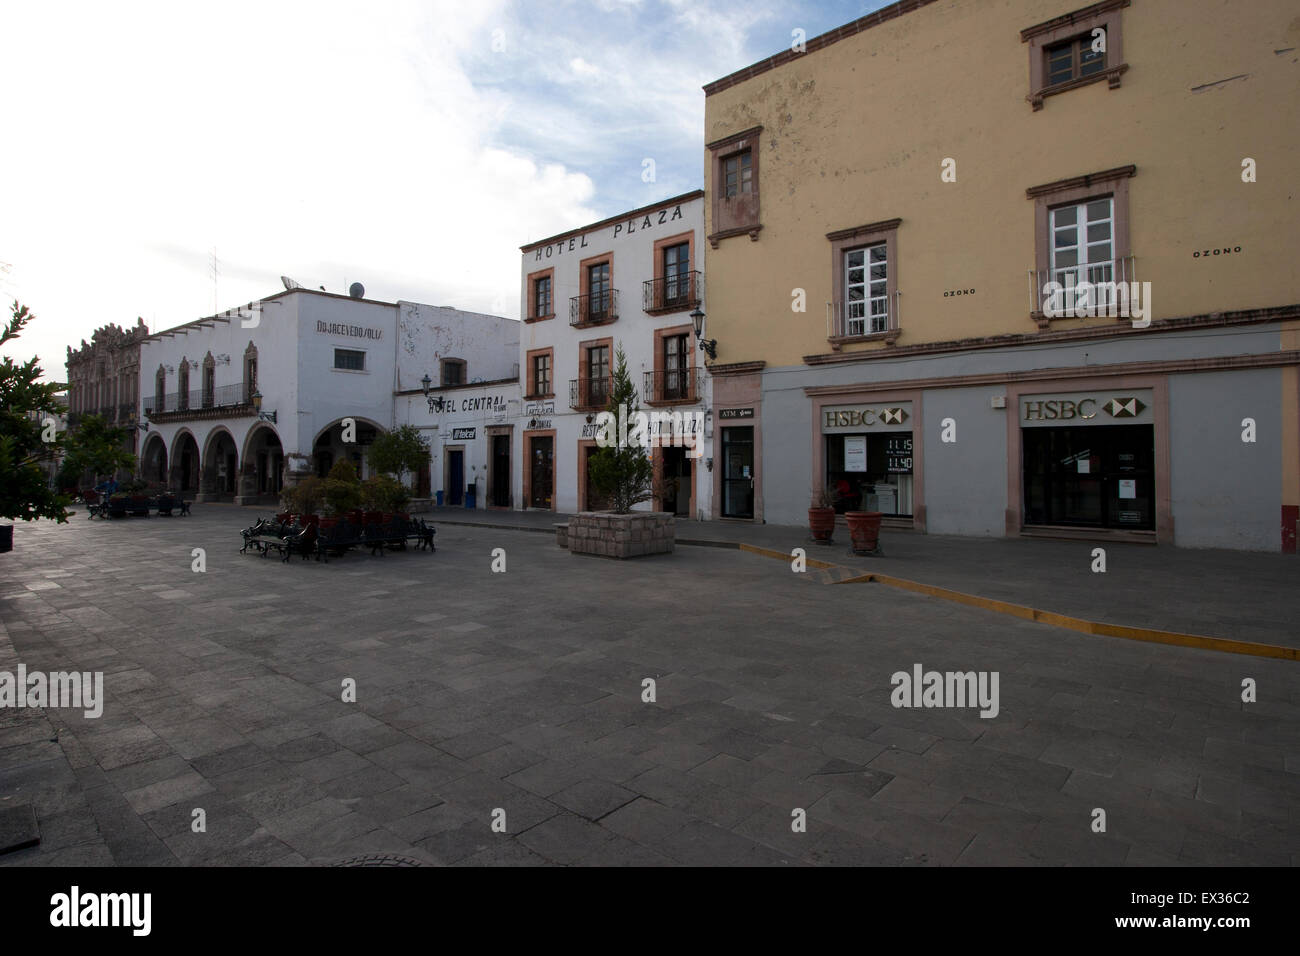 Das Plaza in kolonialen Jerez, Bundesstaat Zacatecas, Mexiko Stockfoto